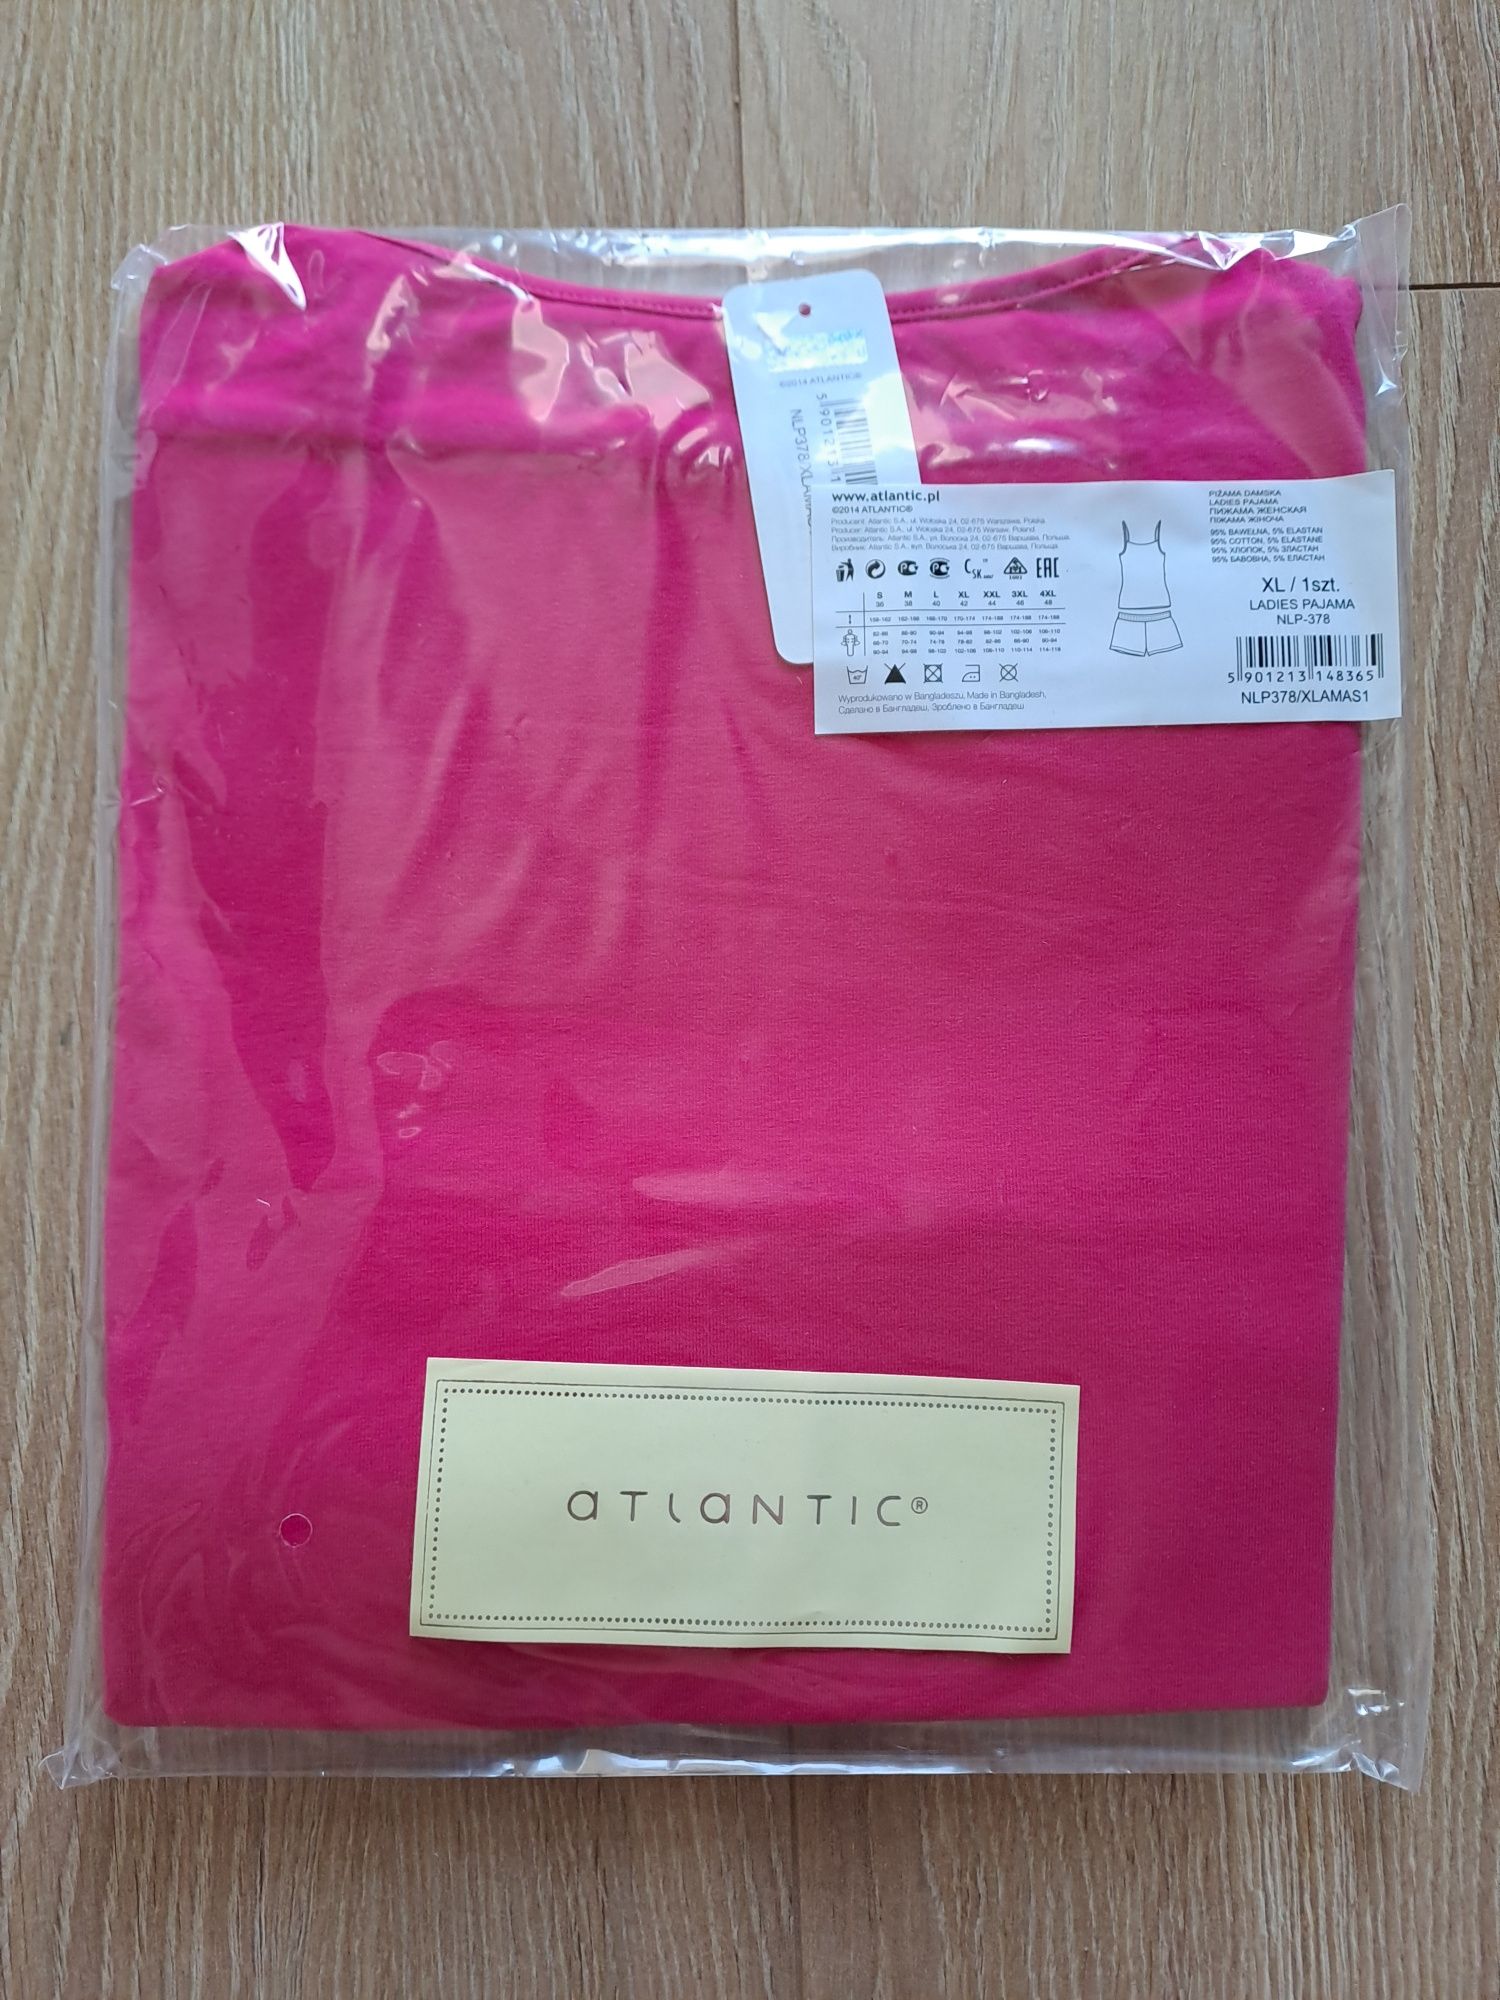 Piżama damska Atlantic, rozmiar XL, amarantowa